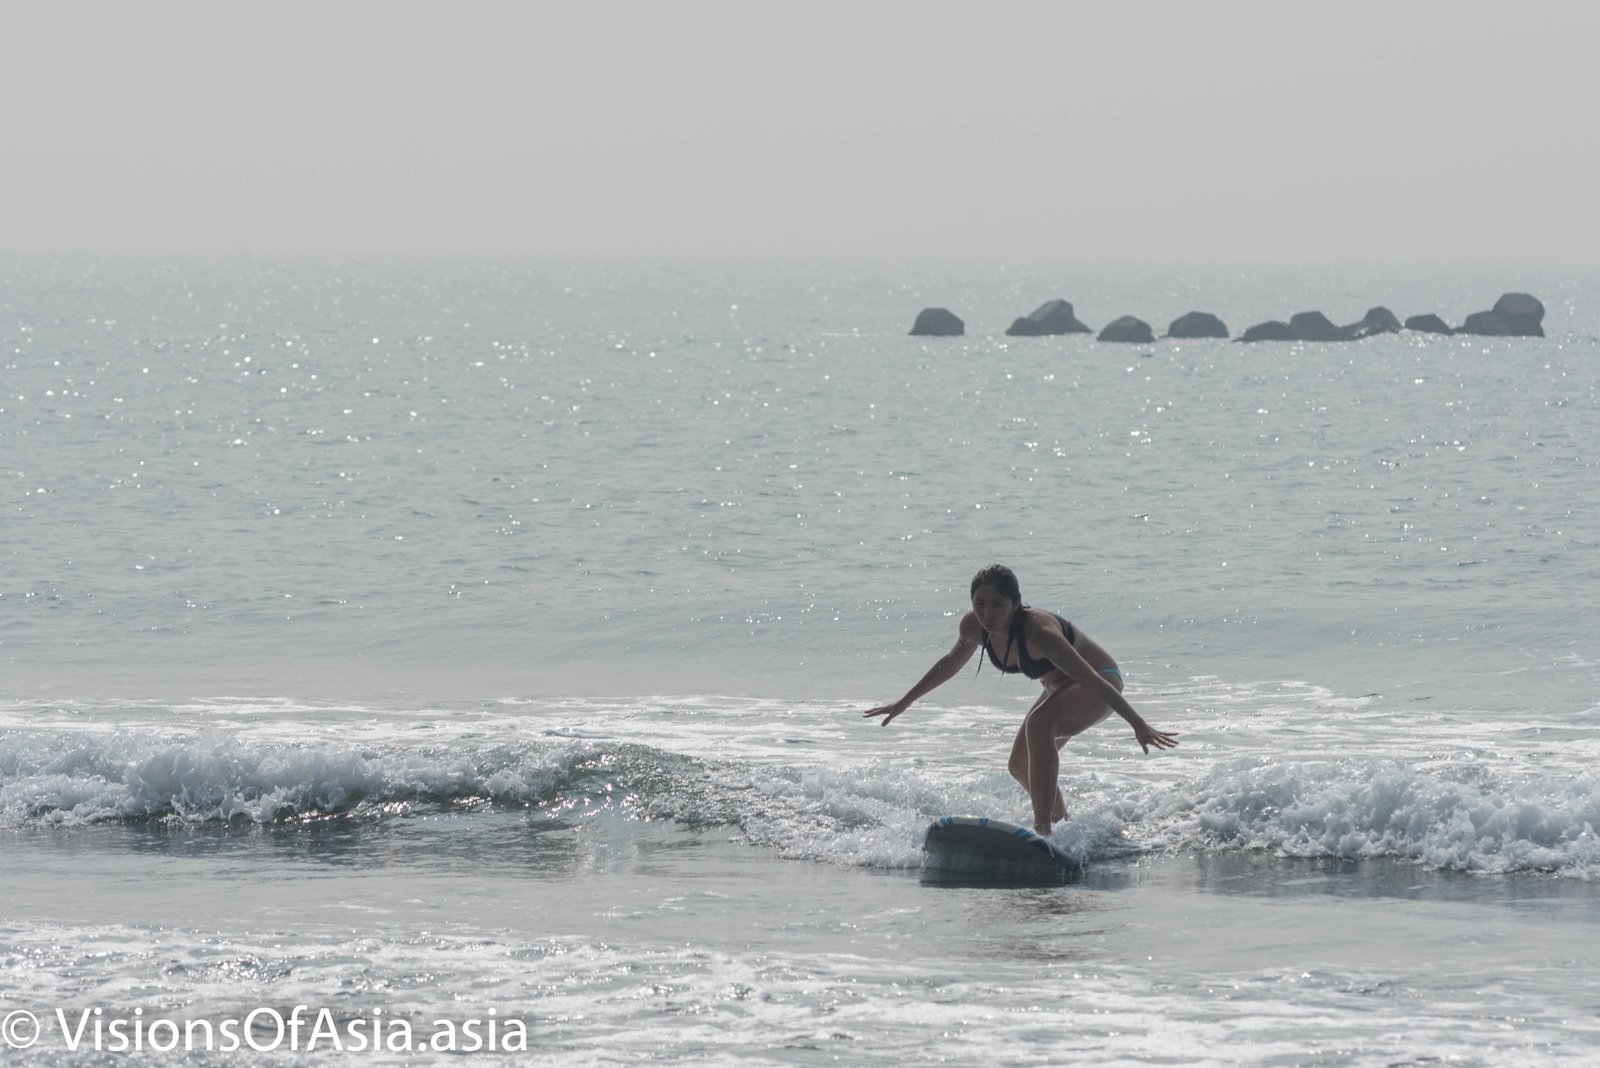 Surfer on Cinjin island